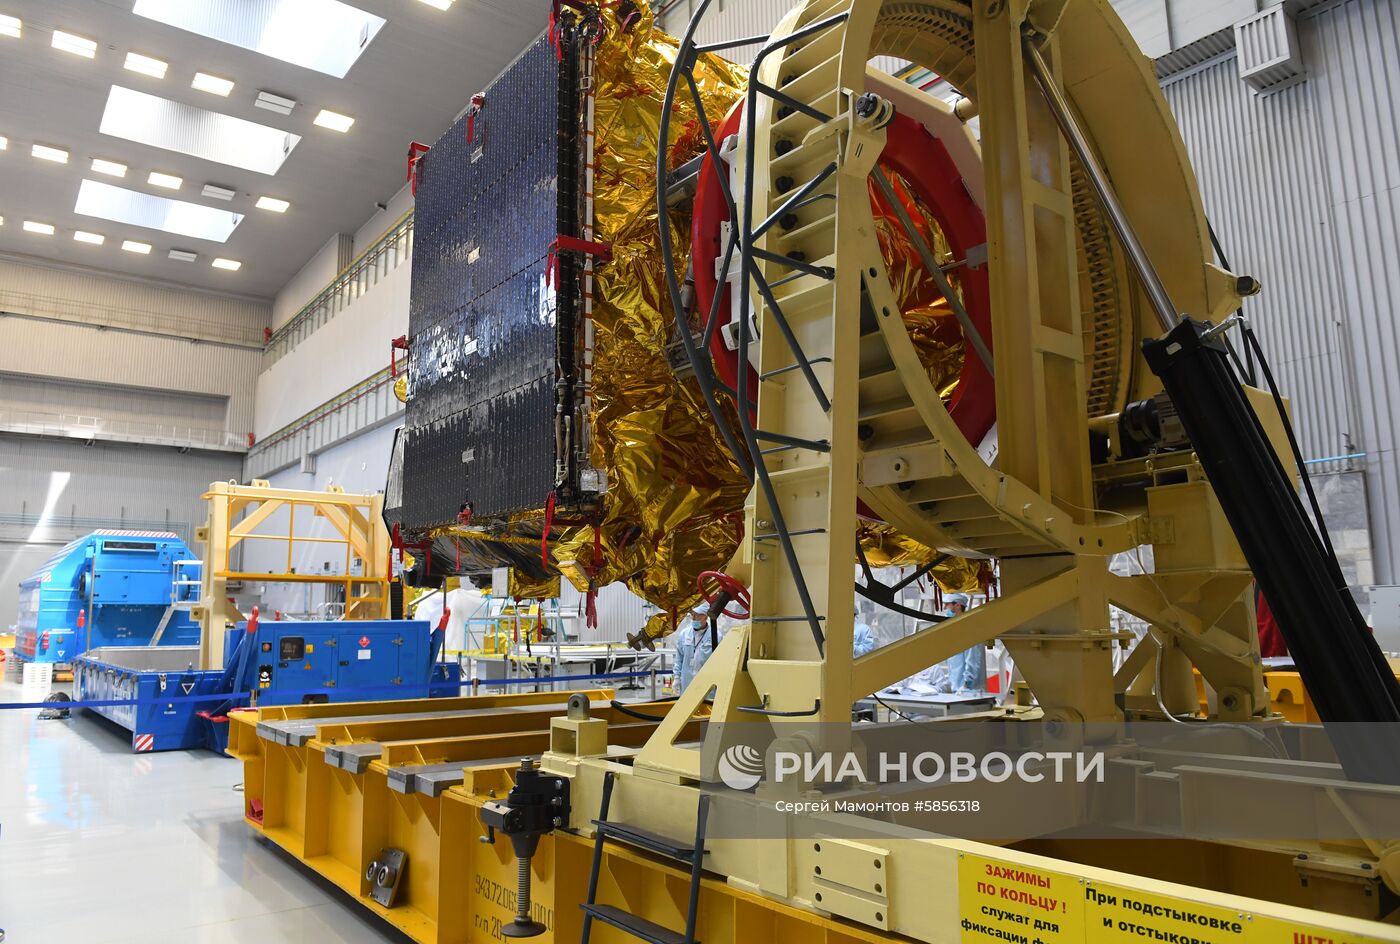 Космический аппарат "Спектр-РГ" перед отправкой на Байконур